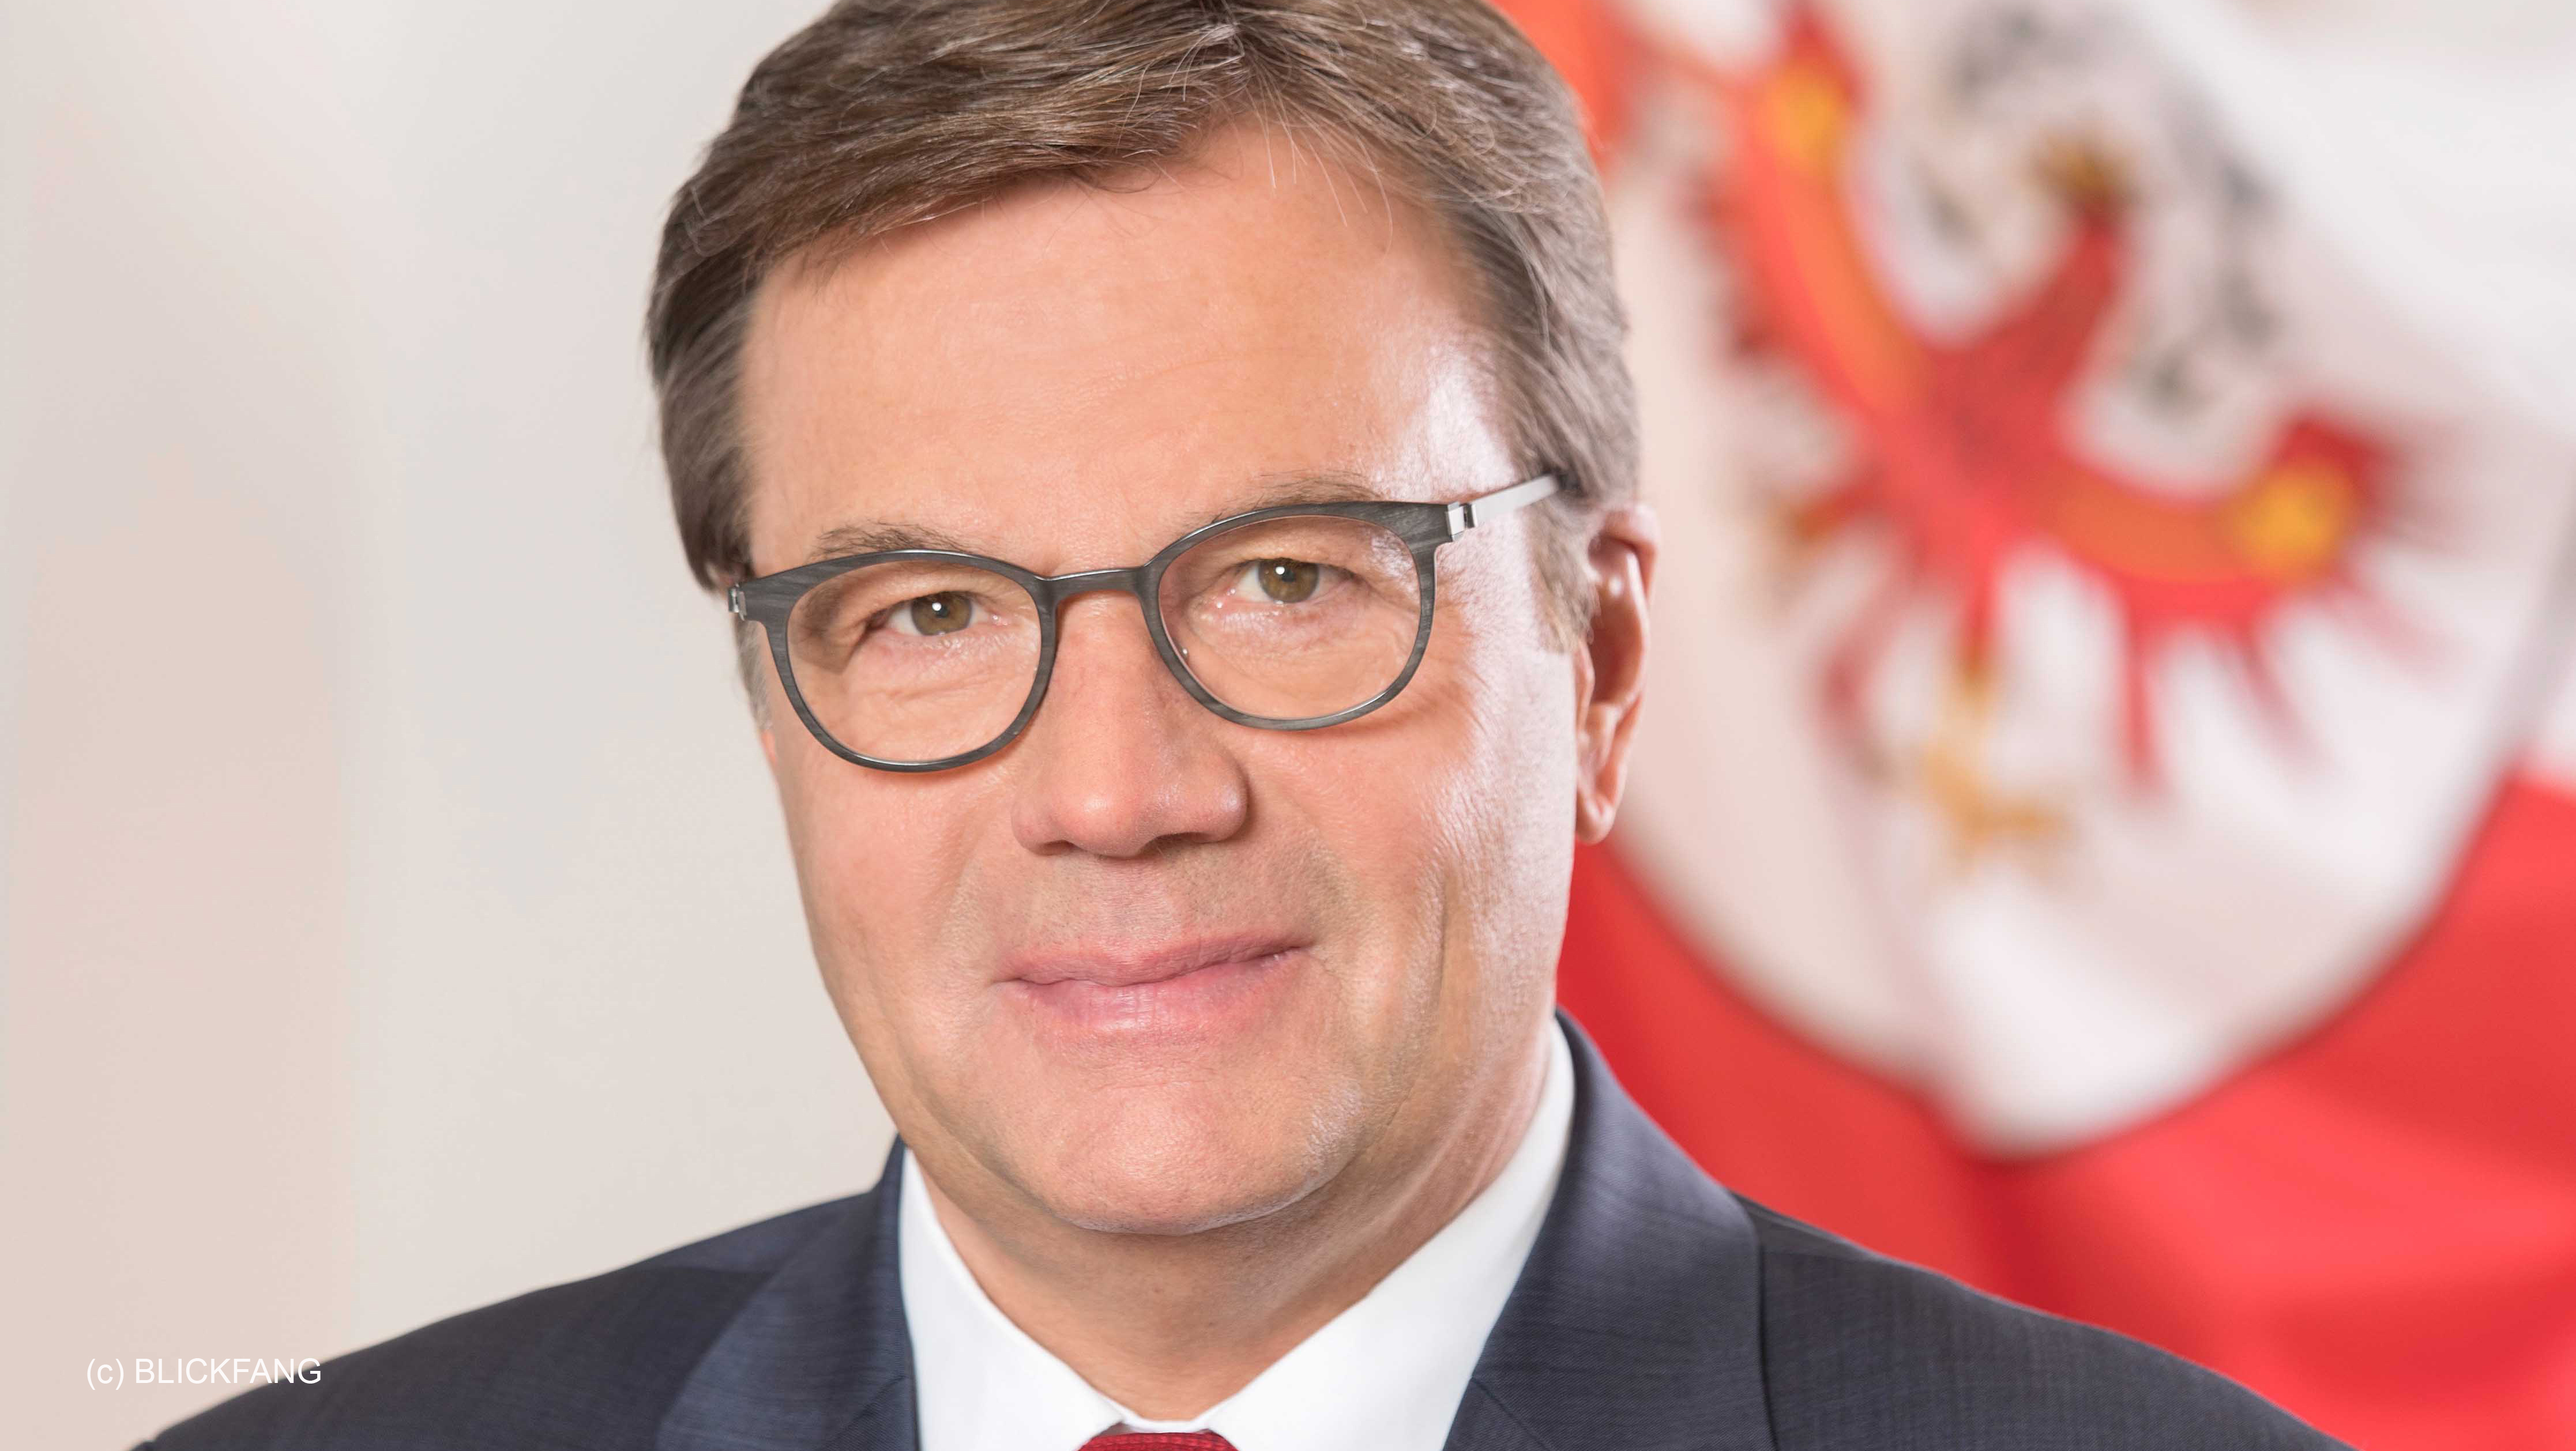 Günther Platter, Governor of Tyrol